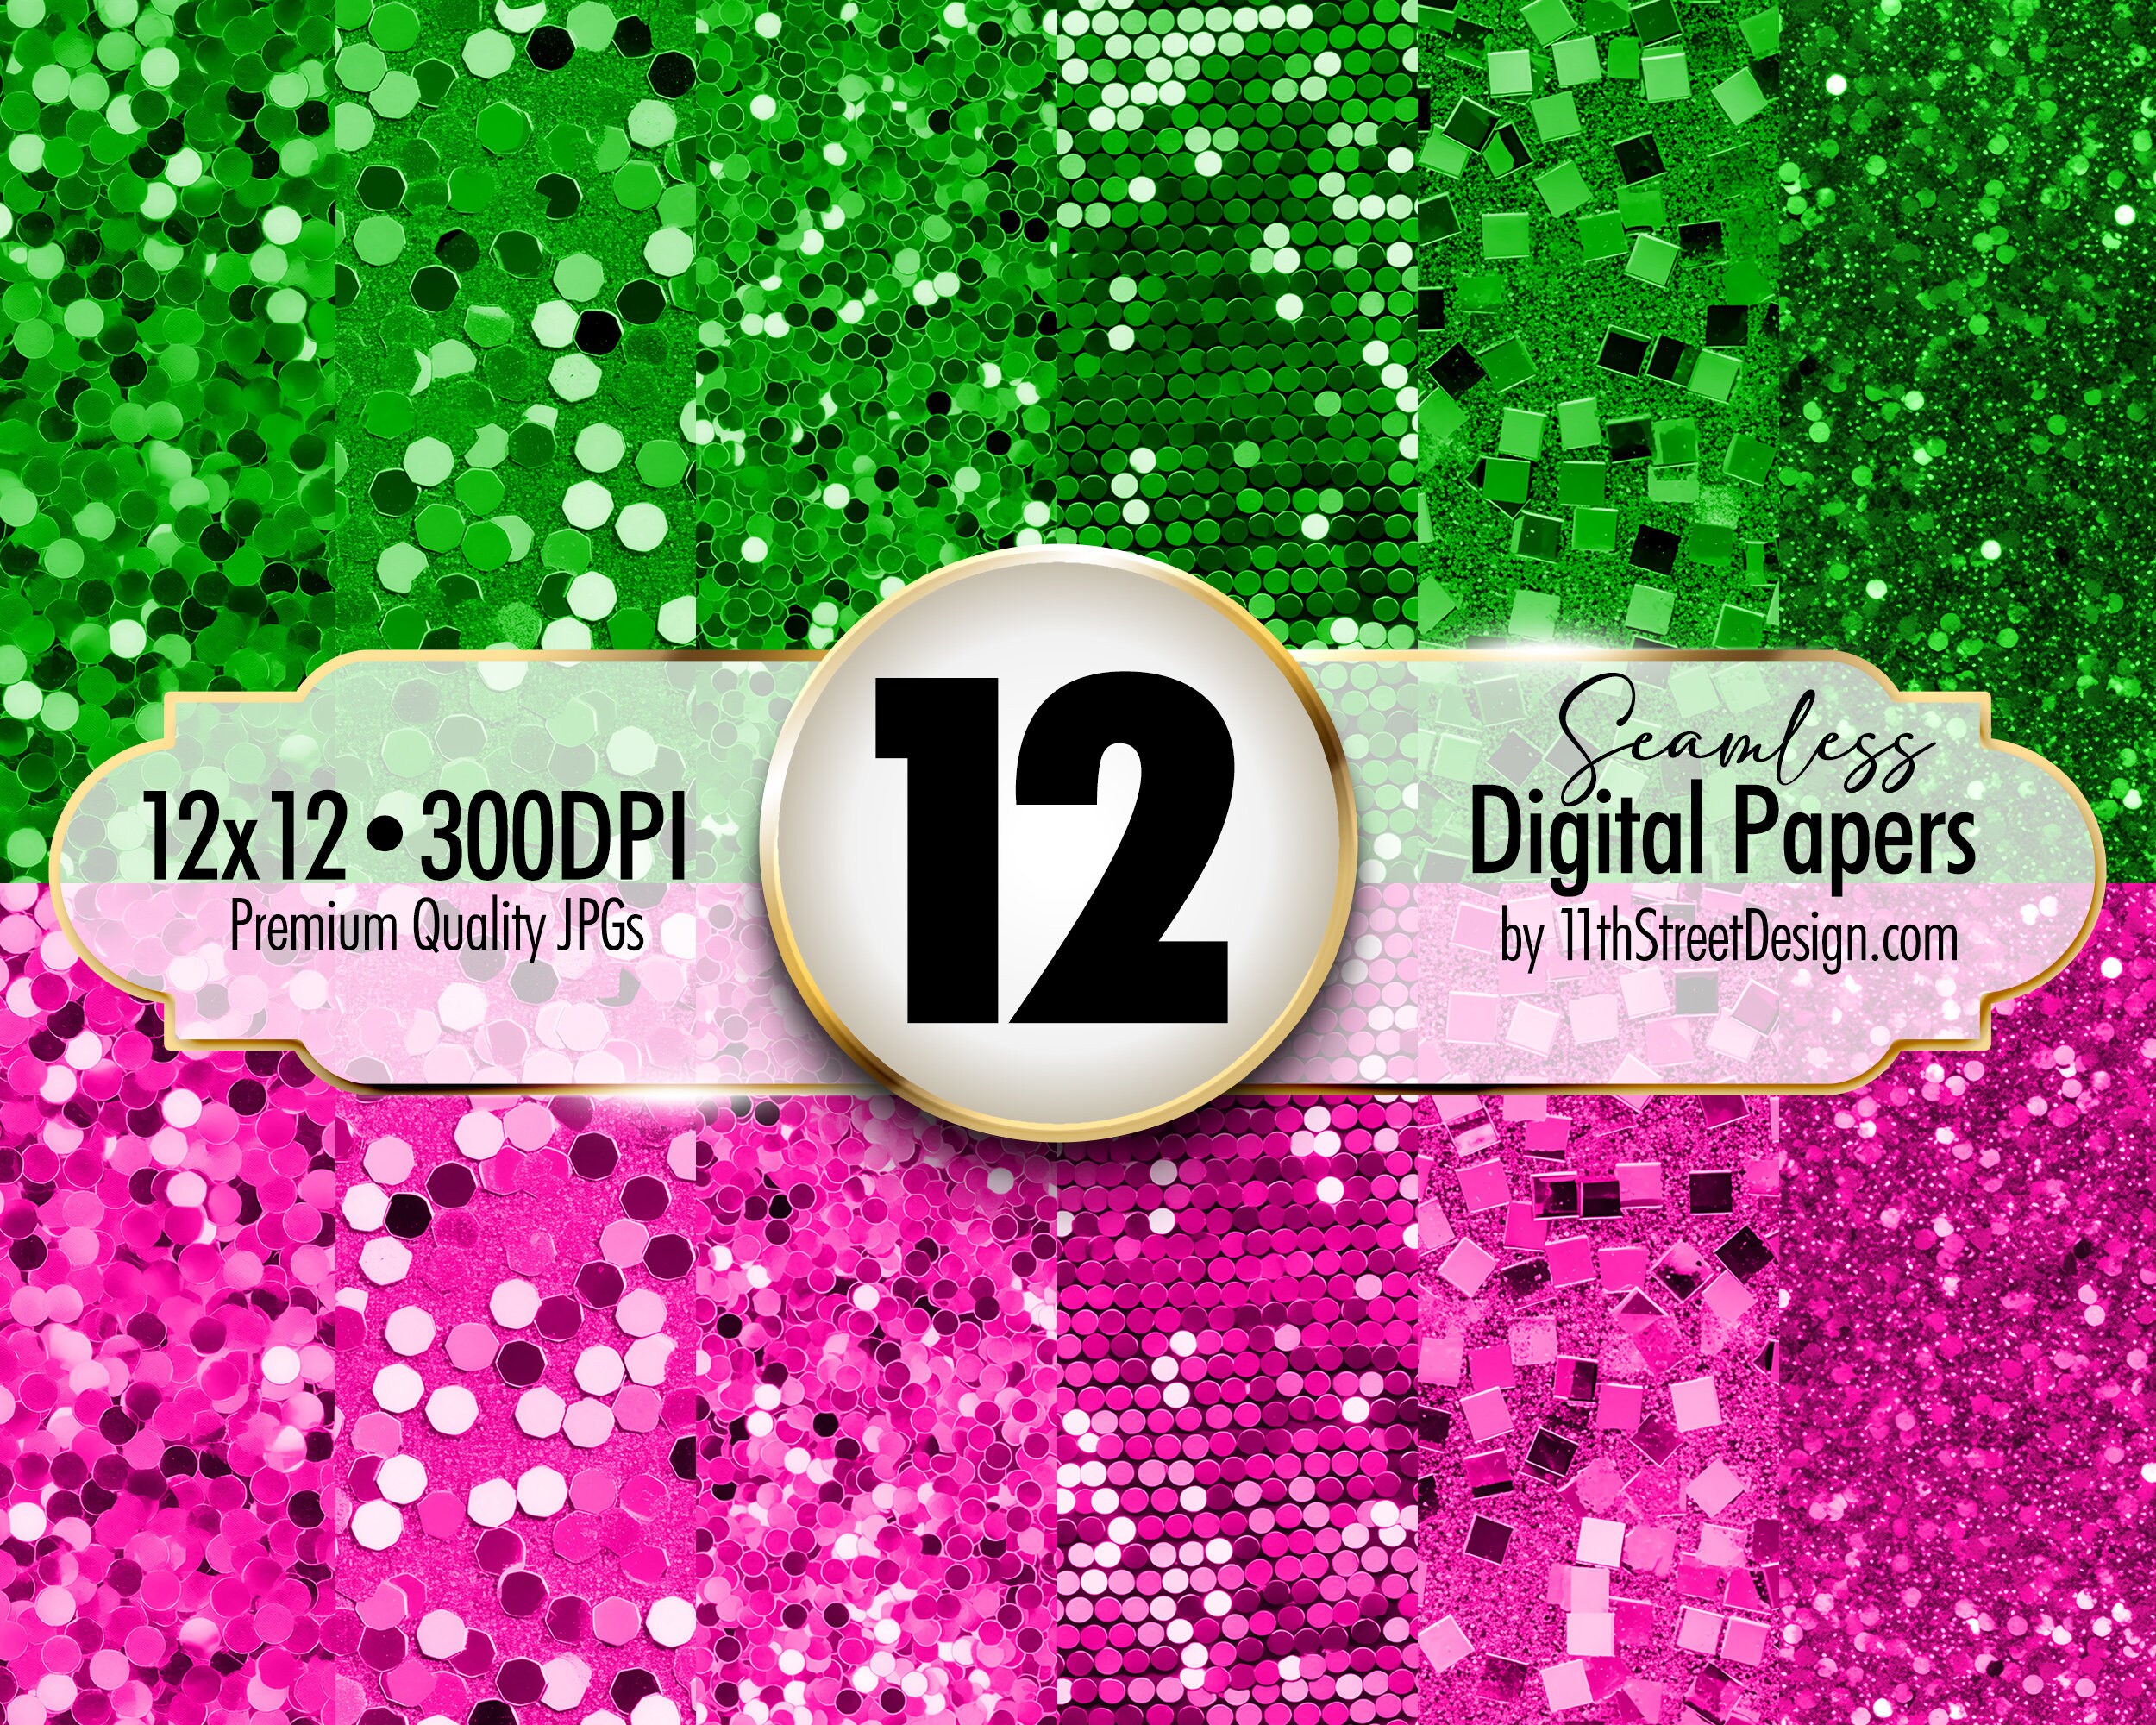 Fluorescent Pink Glittering tape 1 Inch wide x 25 feet , Hot Pink Spar –  Paper Street Plastics